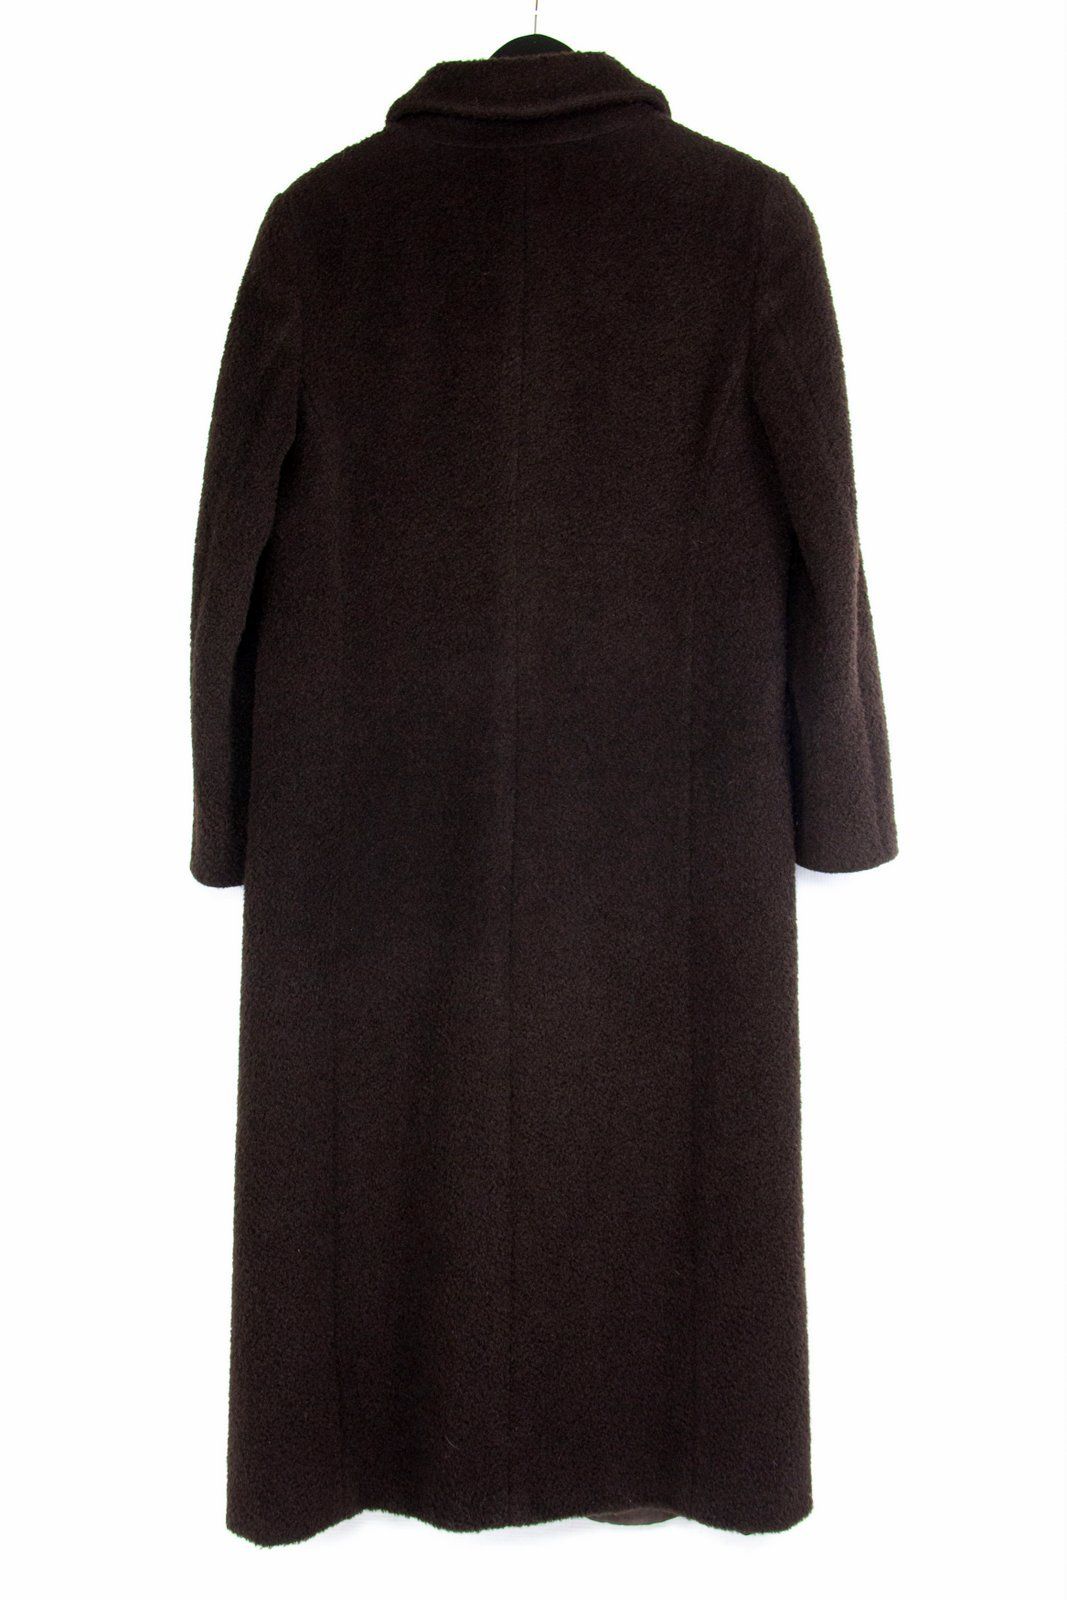 M.K. EMKAY women's Alpaca Wool Brown Long Coat, Size L, US 12